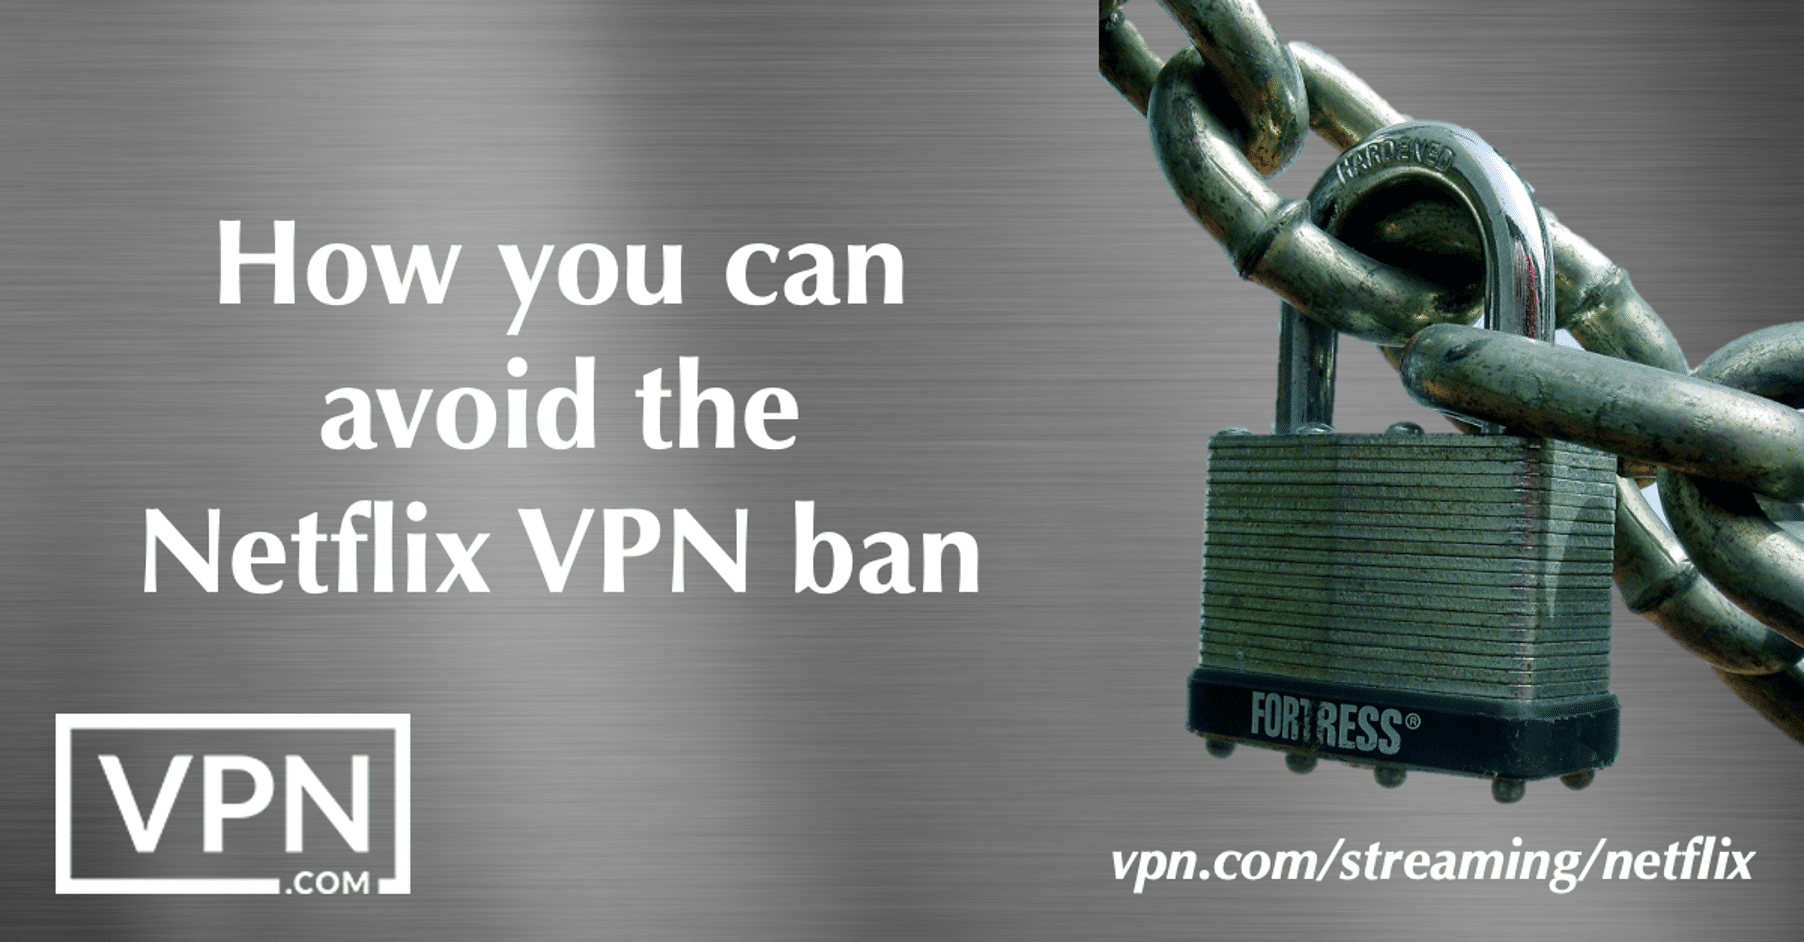 Jak można uniknąć zakazu VPN Netflix?